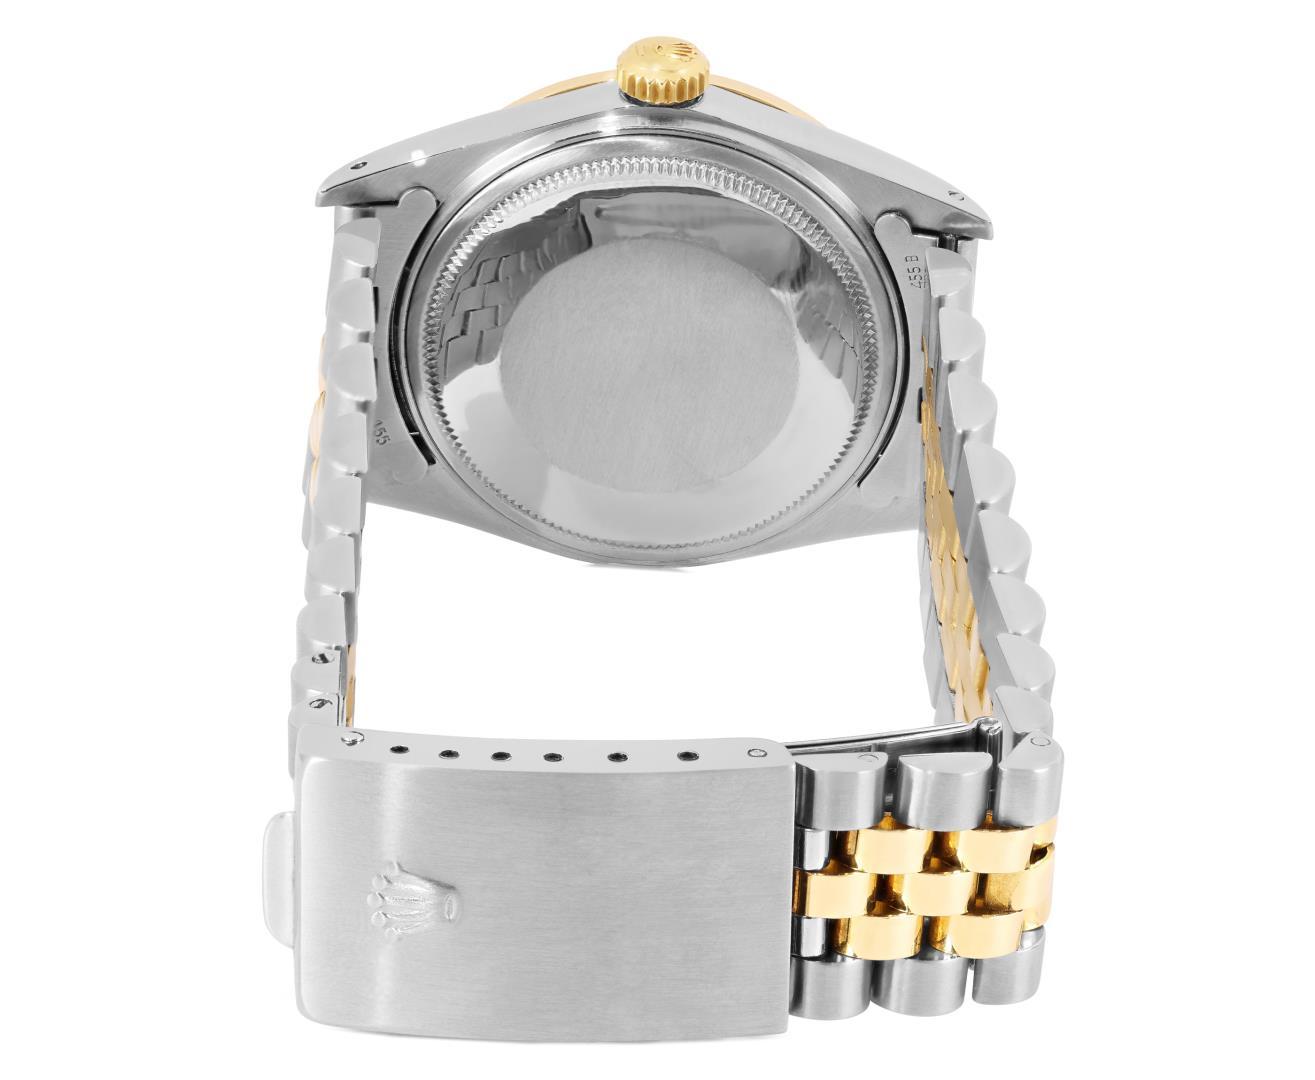 Rolex Mens Two Tone Emerald and Diamond Datejust Wristwatch With Rolex Box